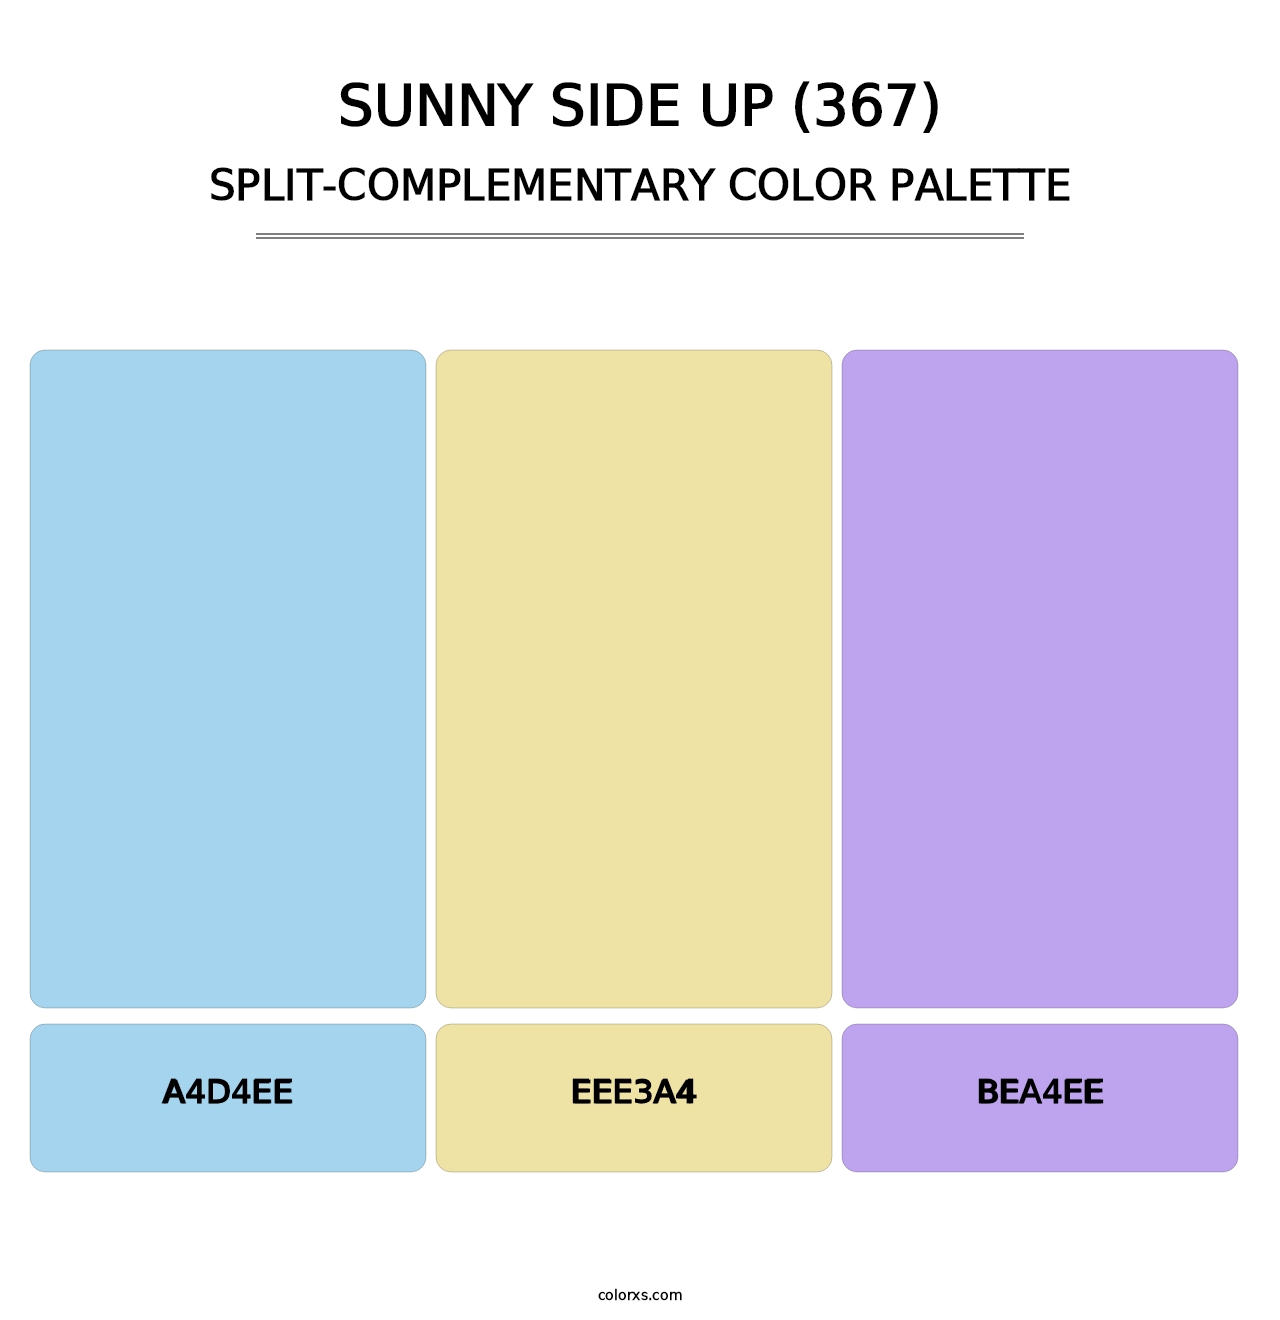 Sunny Side Up (367) - Split-Complementary Color Palette